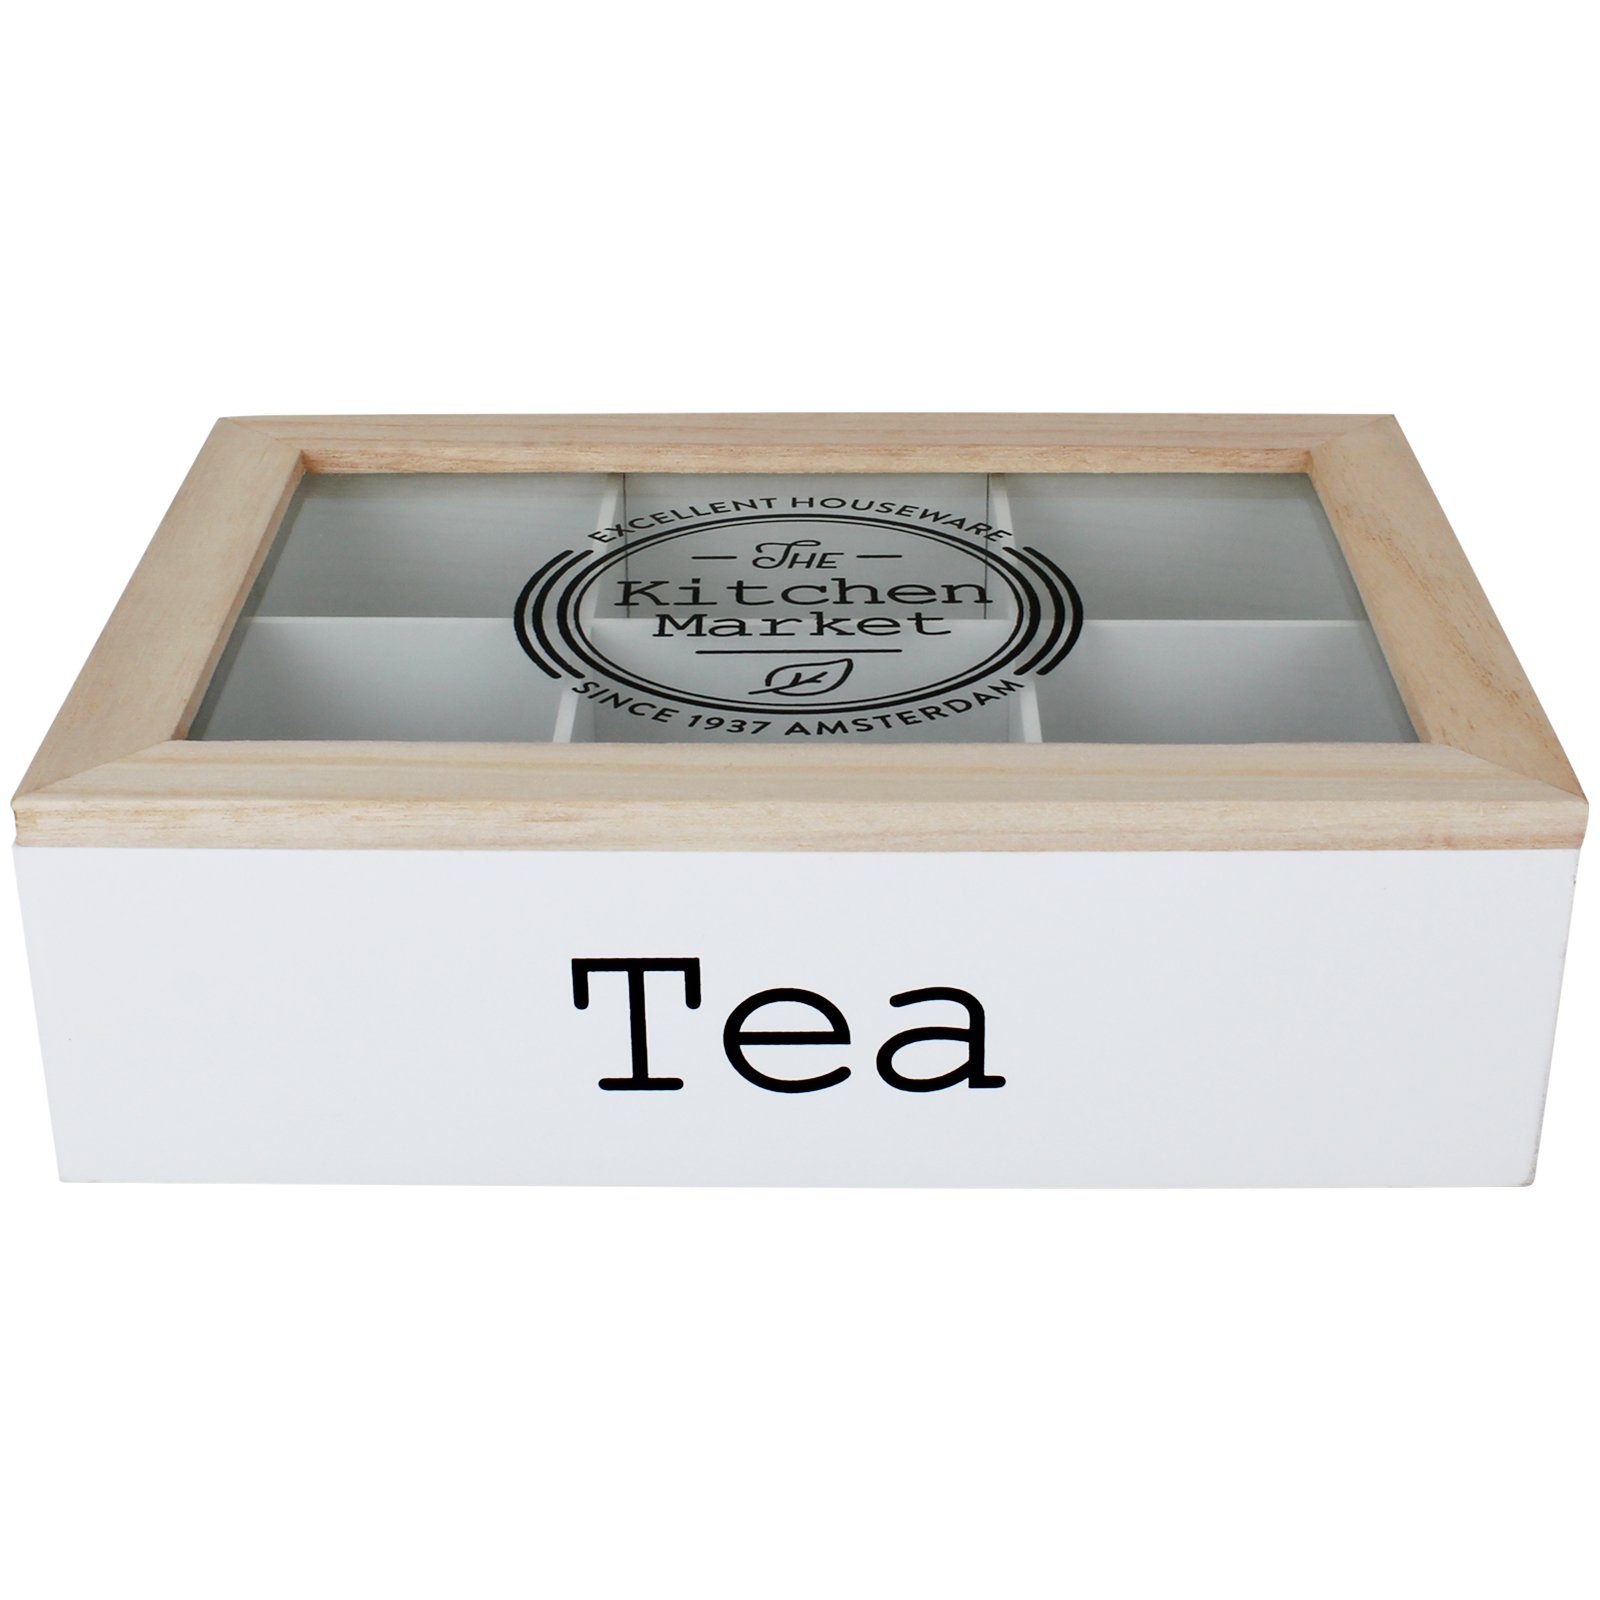 Teedose Teekiste Holzteebox, Dose Teekasten Teebox Kitchen Koopman Modellwahl Teebeutelbox Aufbewahrung Box Market Kiste Tee Teebeutel